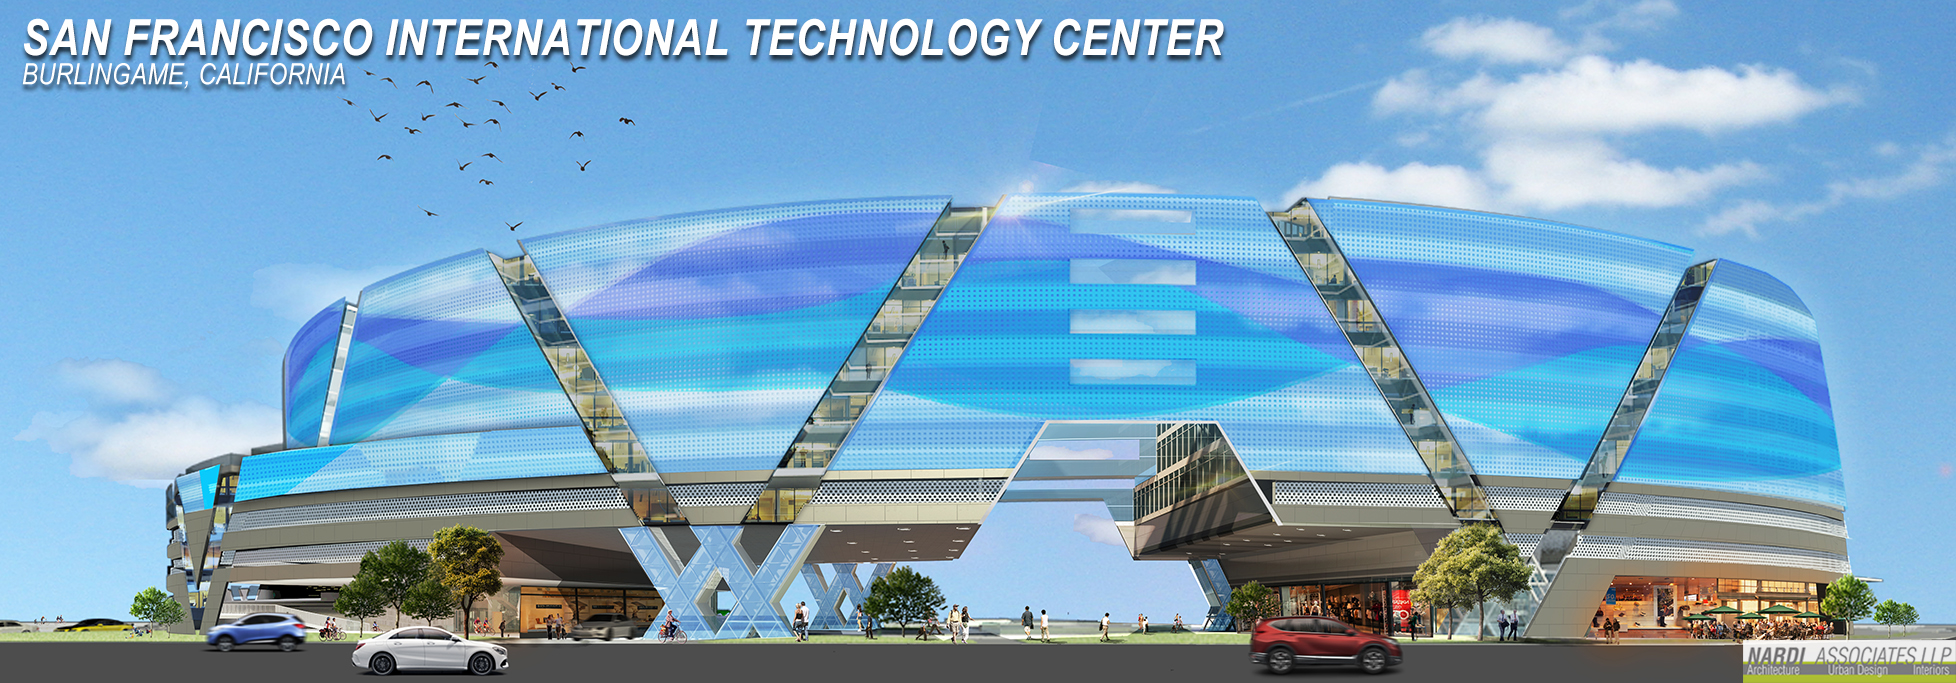 San Francisco International Technology Center